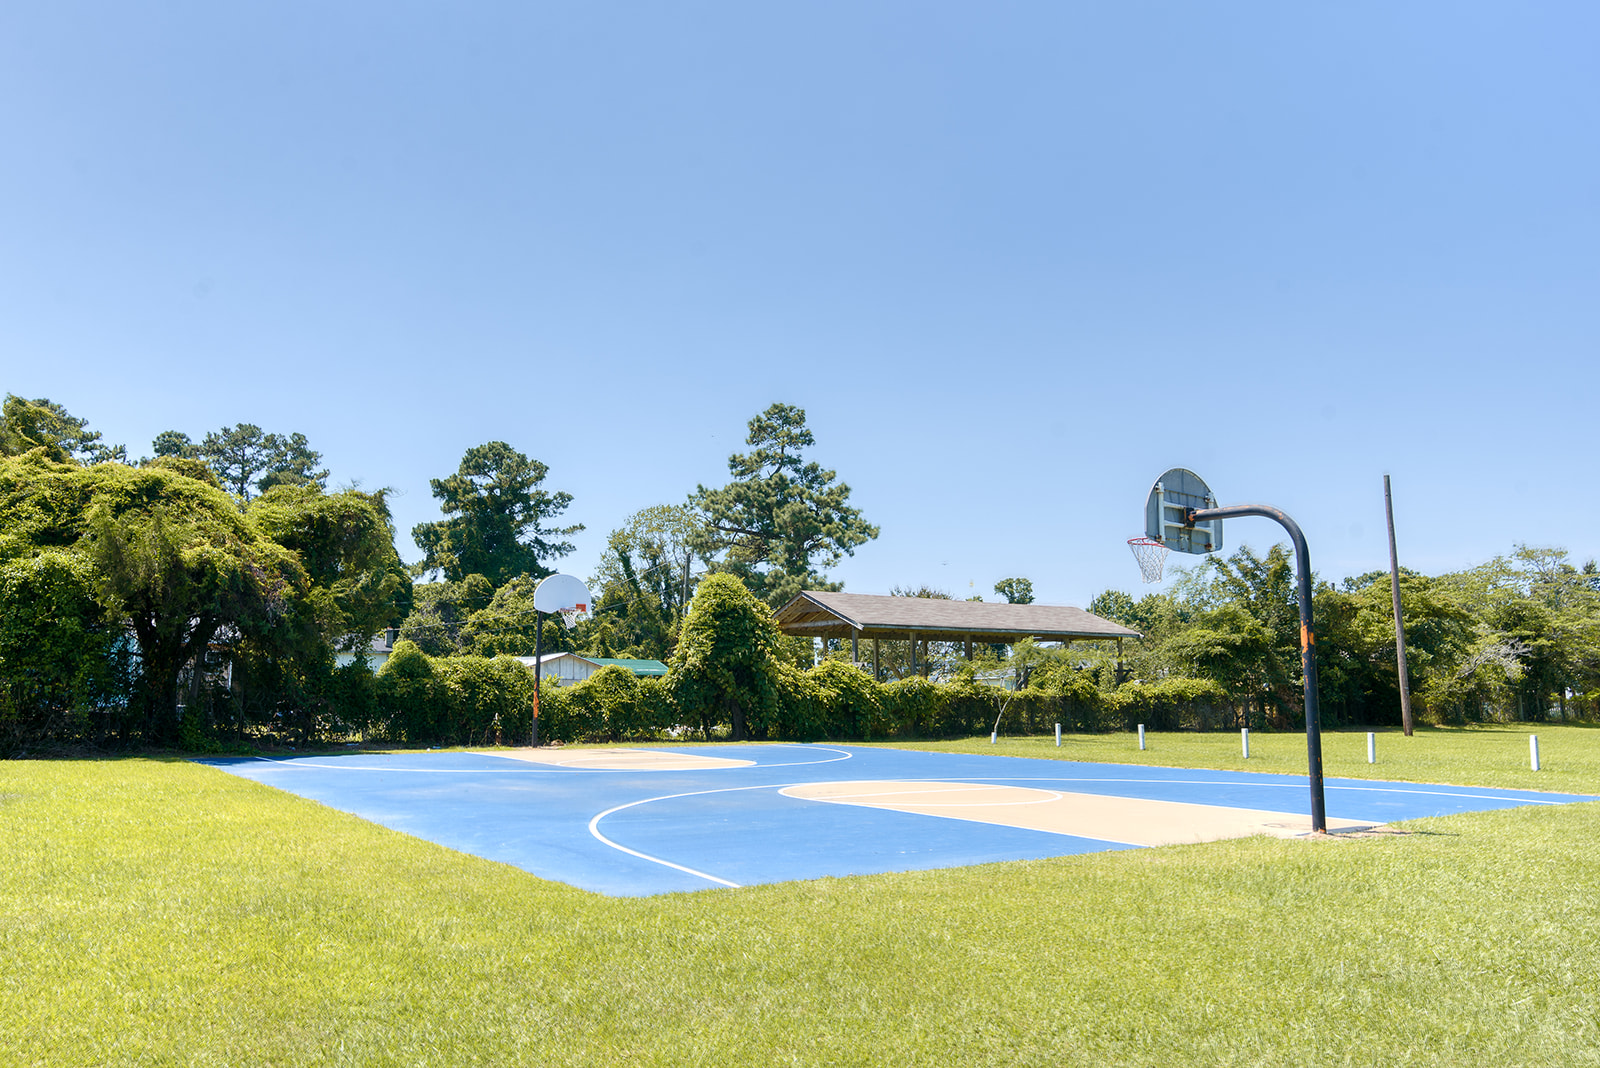 Image of Wescott Park outdoor basketball court